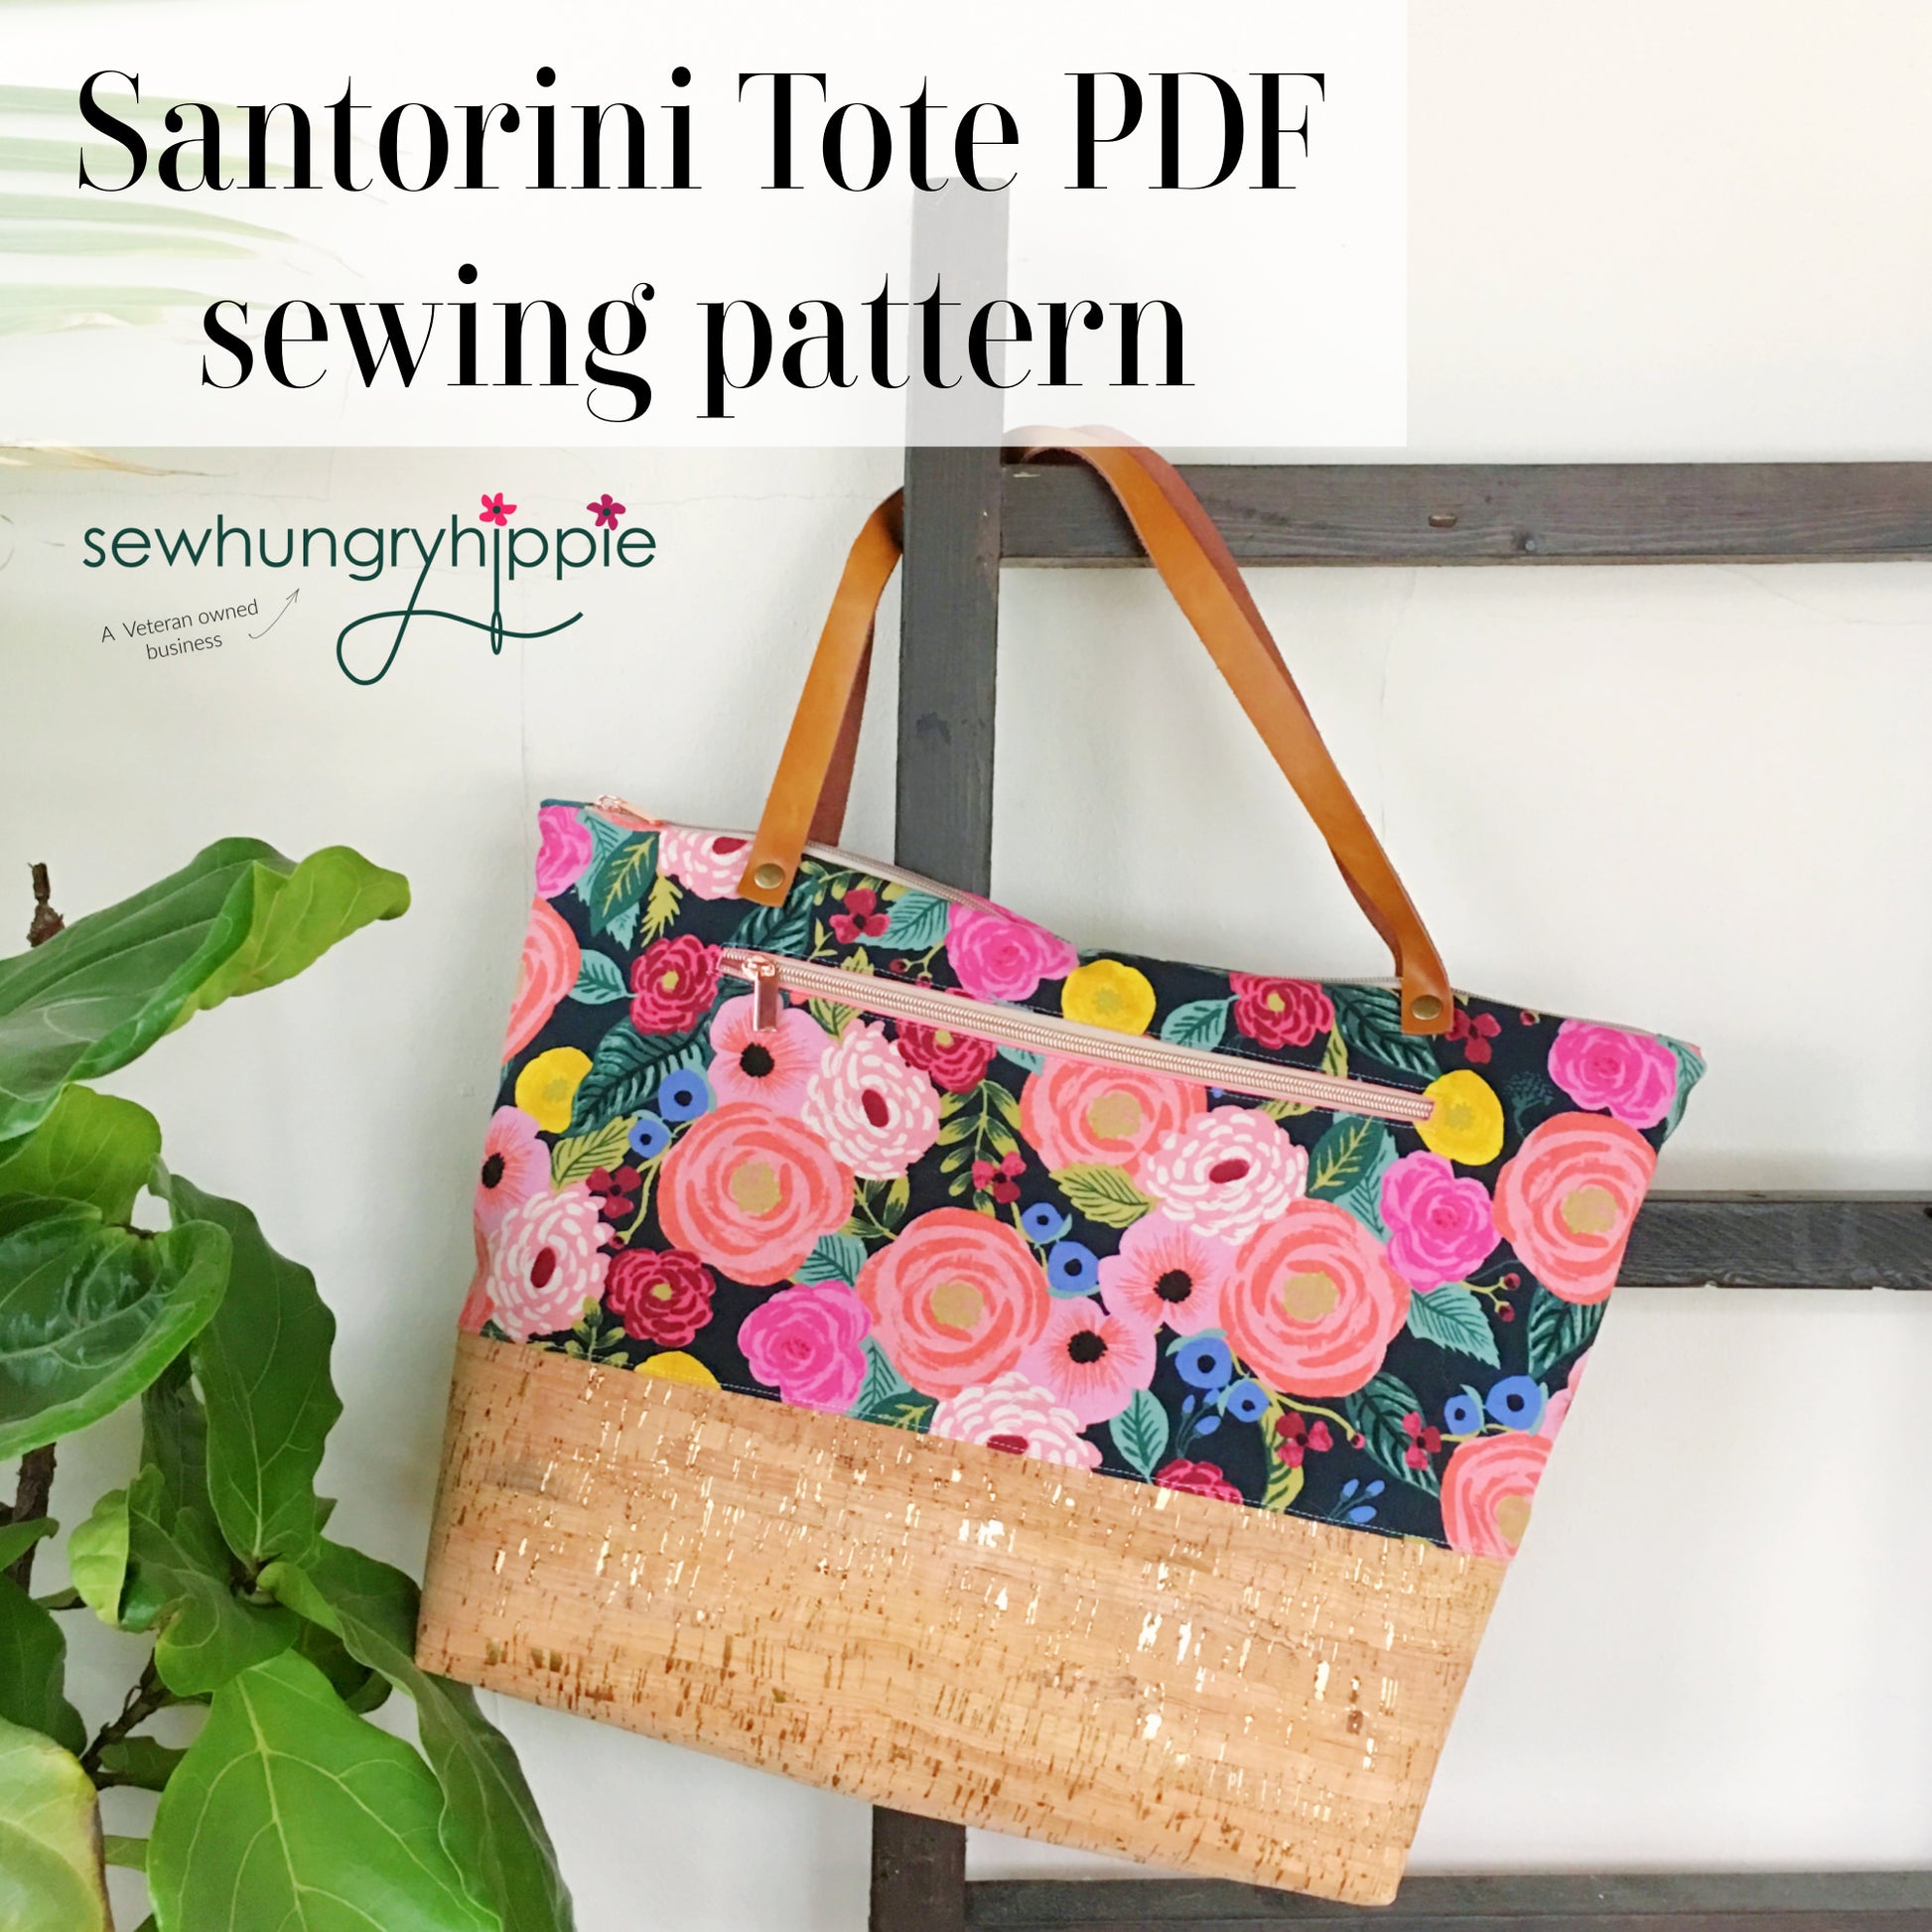 Santorini Tote PDF Pattern, Original product by Sew Hungryhippie